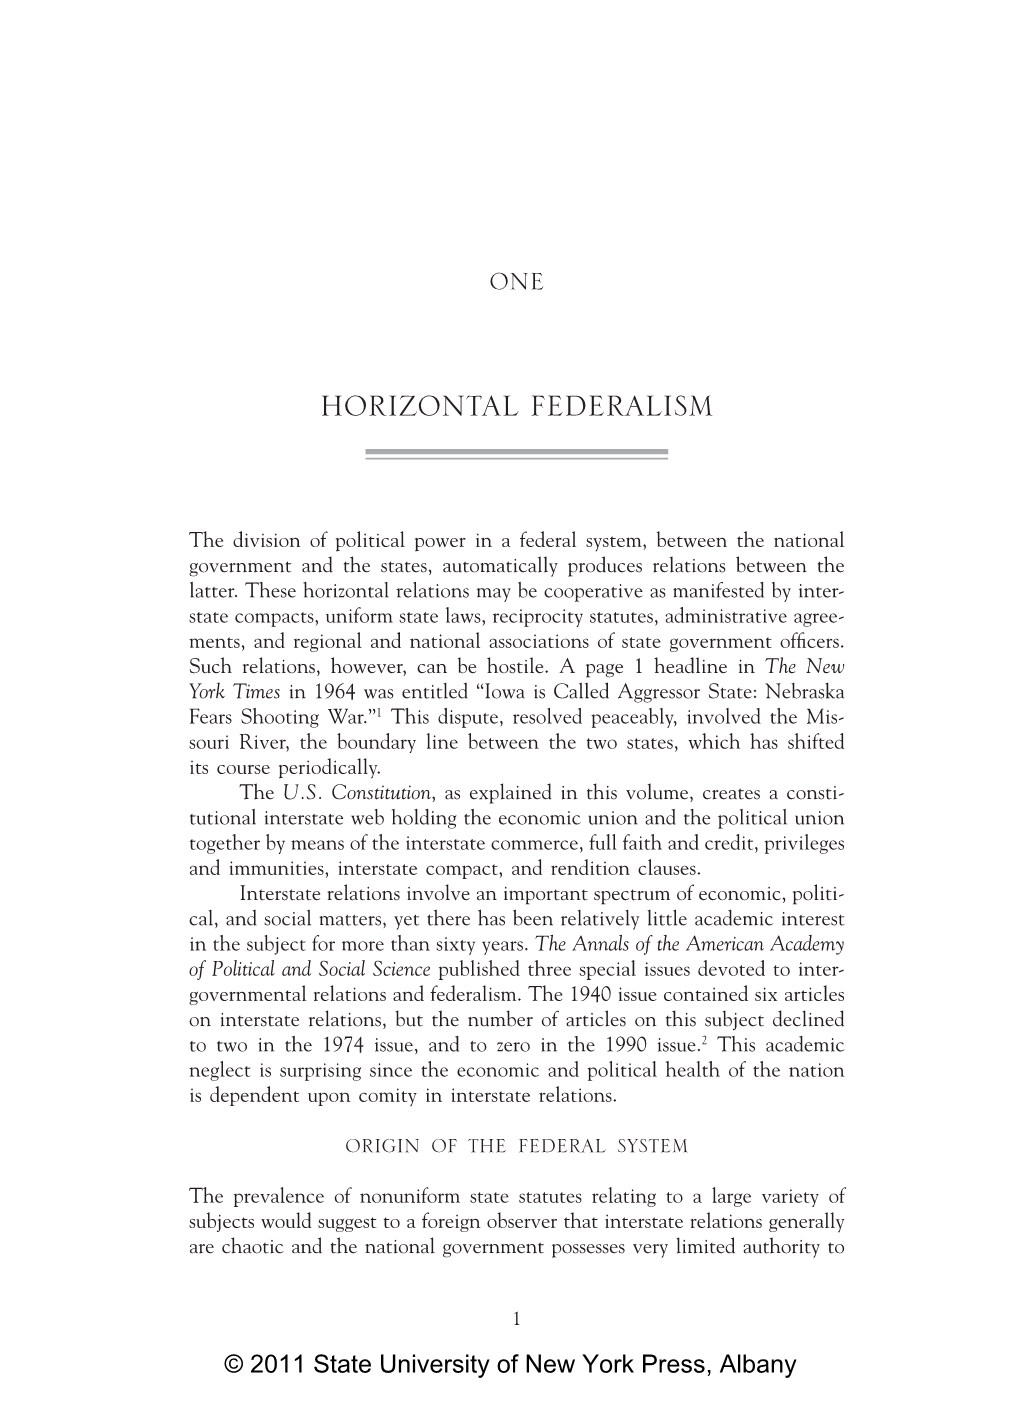 Horizontal Federalism